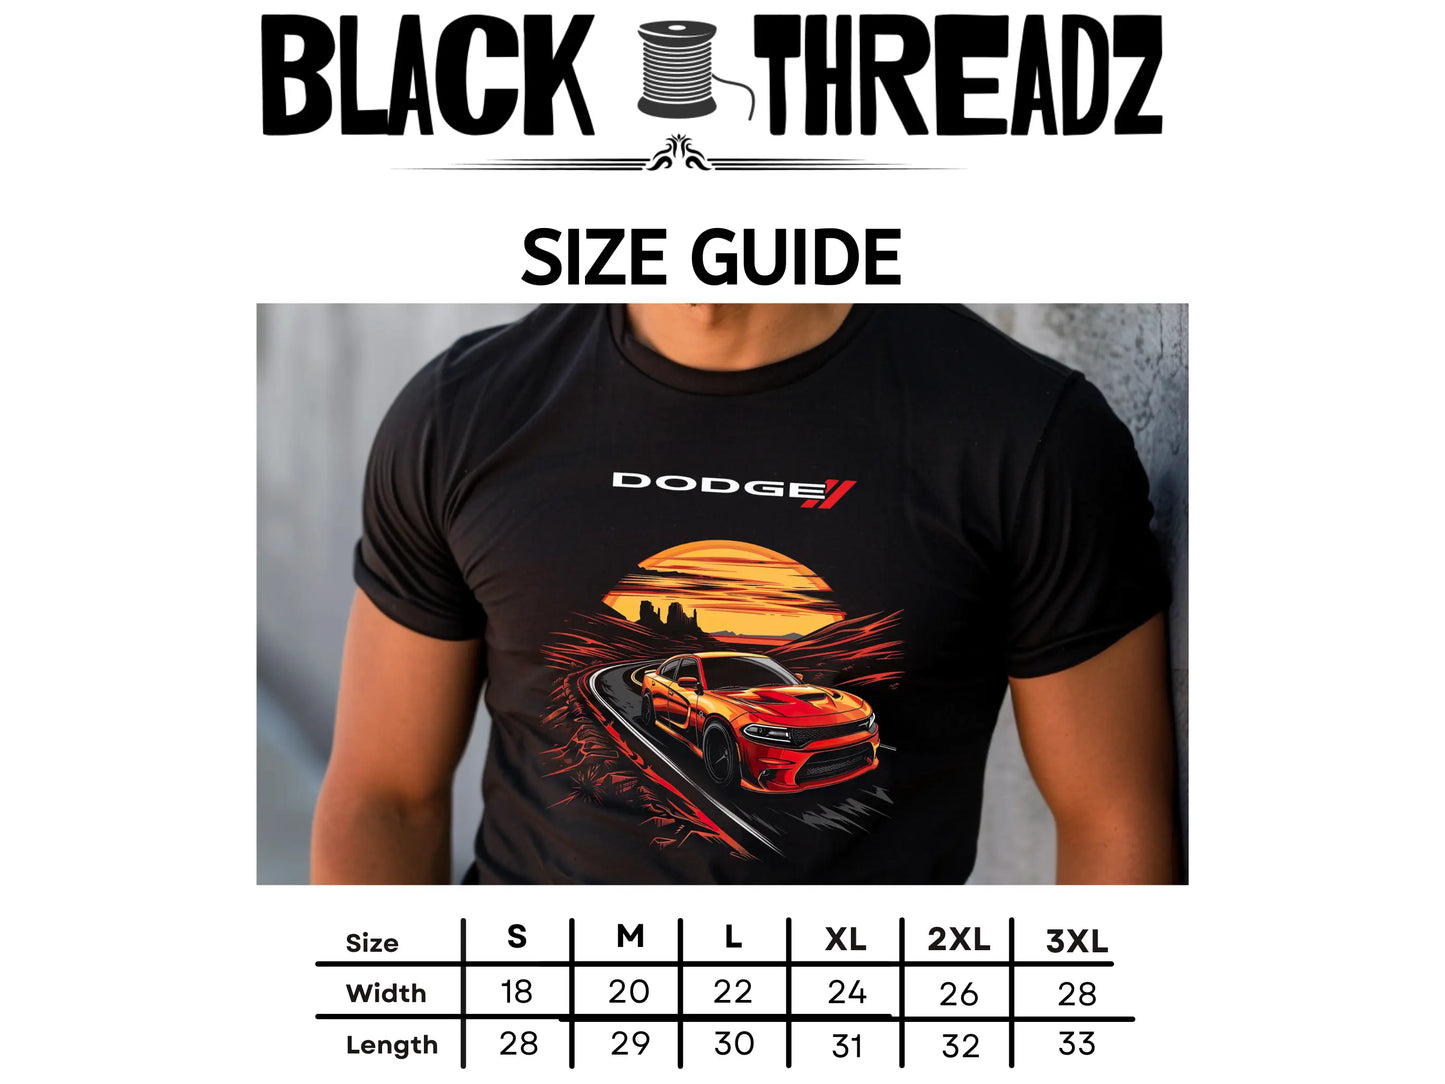 Bentayga Sunset Silhouette Black T-Shirt - Luxury SUV Design - Black Threadz